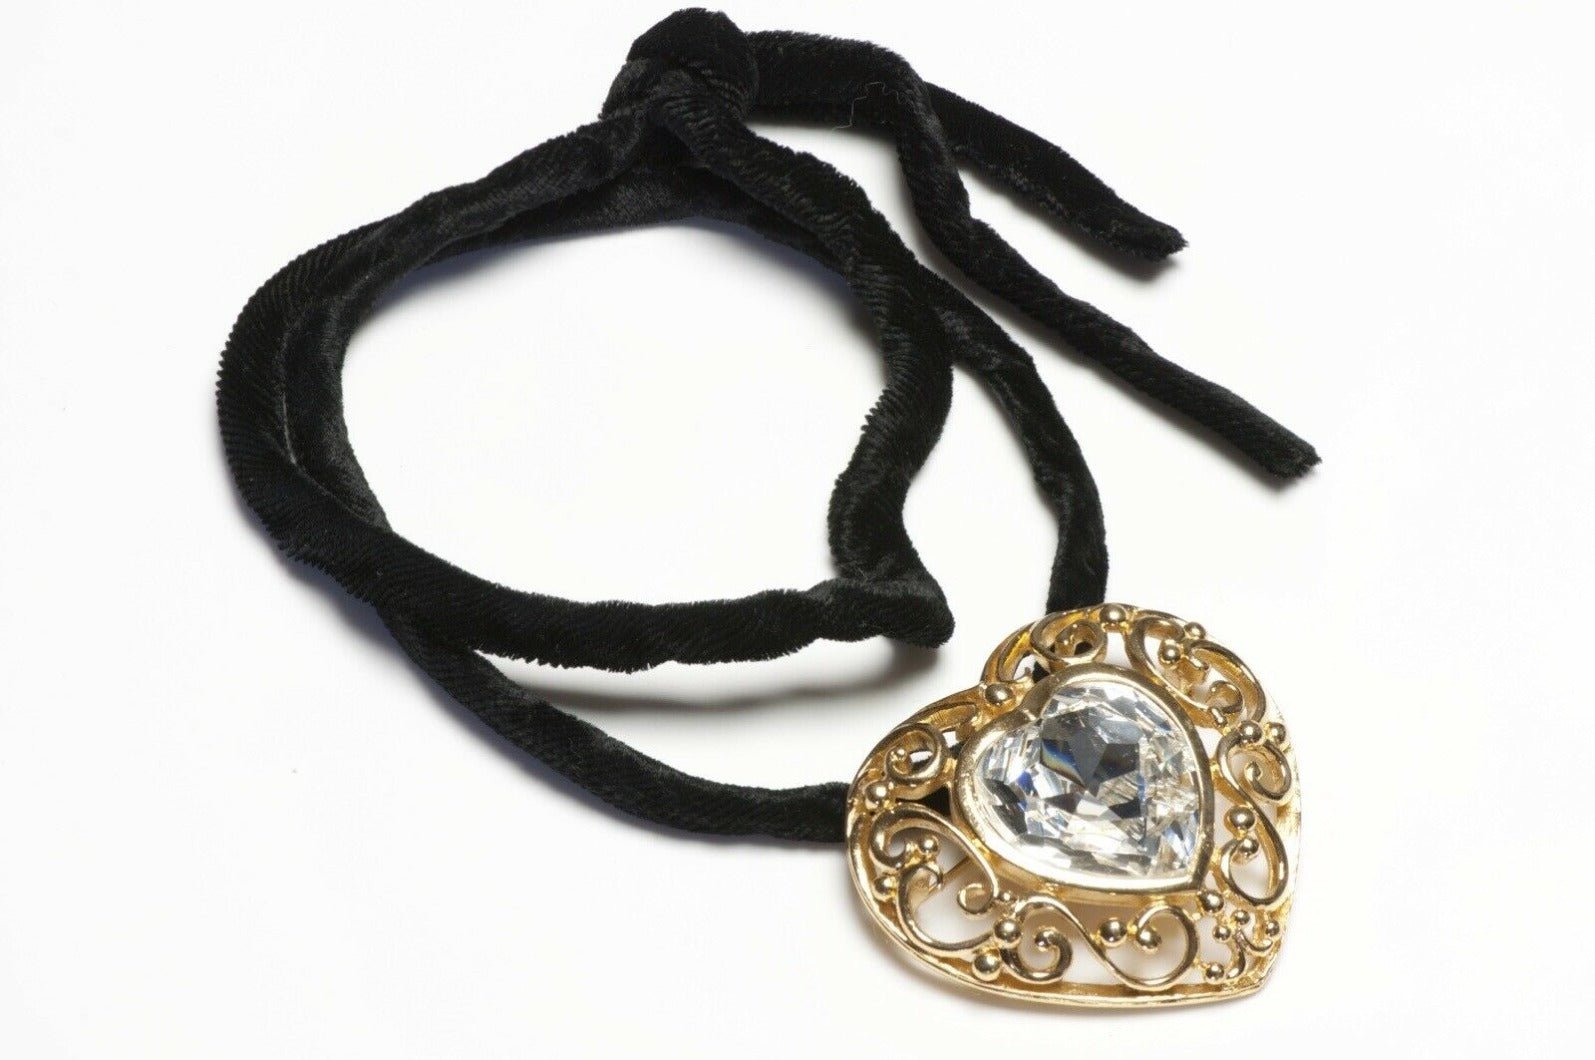 Vintage Christian Dior Paris Heart Crystal Brooch Pendant Necklace